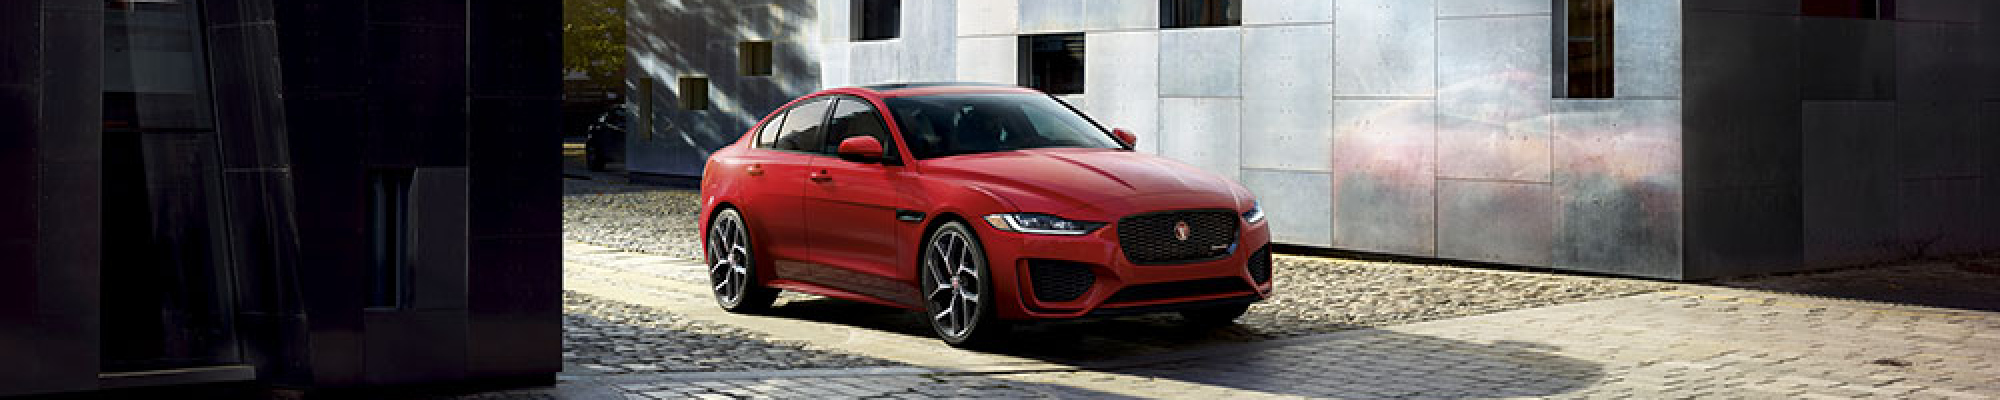 2020-Jaguar-XE-Enthusiast-Update-featured-image